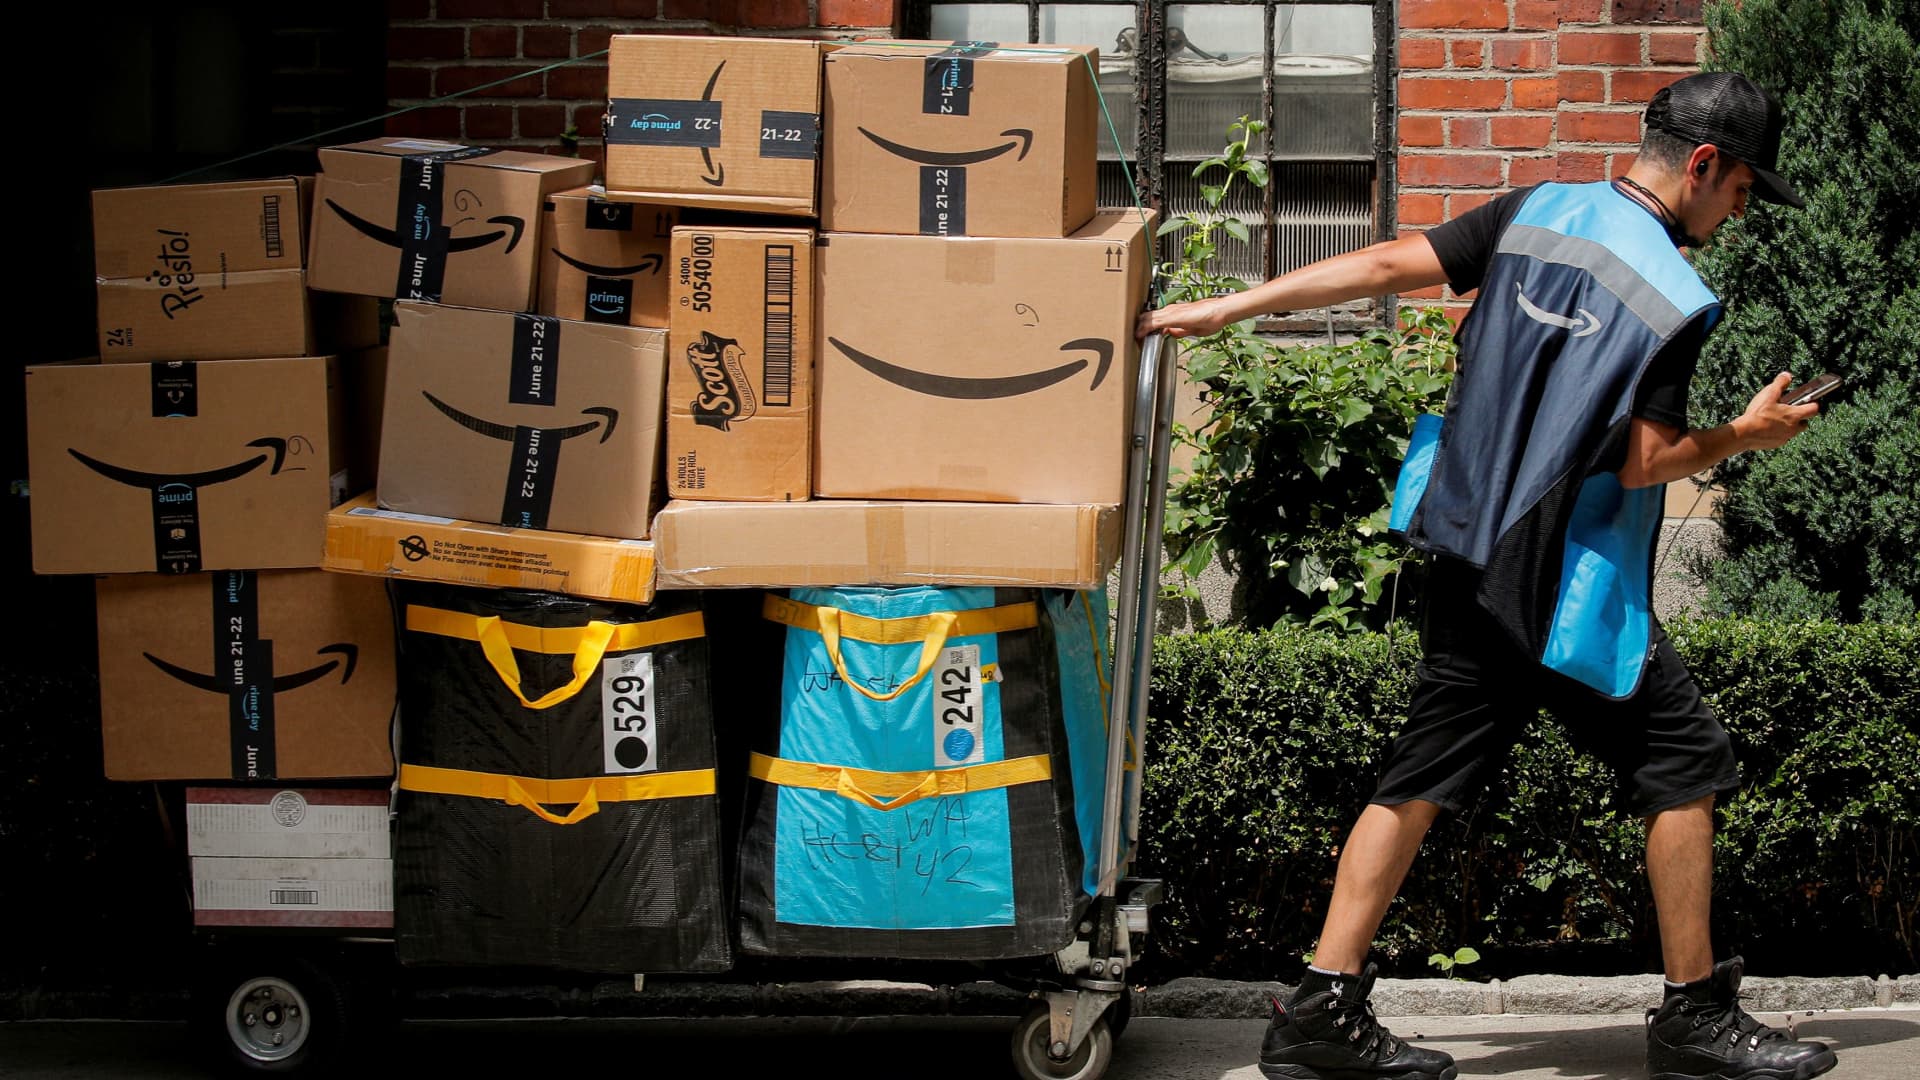 Amazon says consumer demand still strong, bucking broader retail gloom